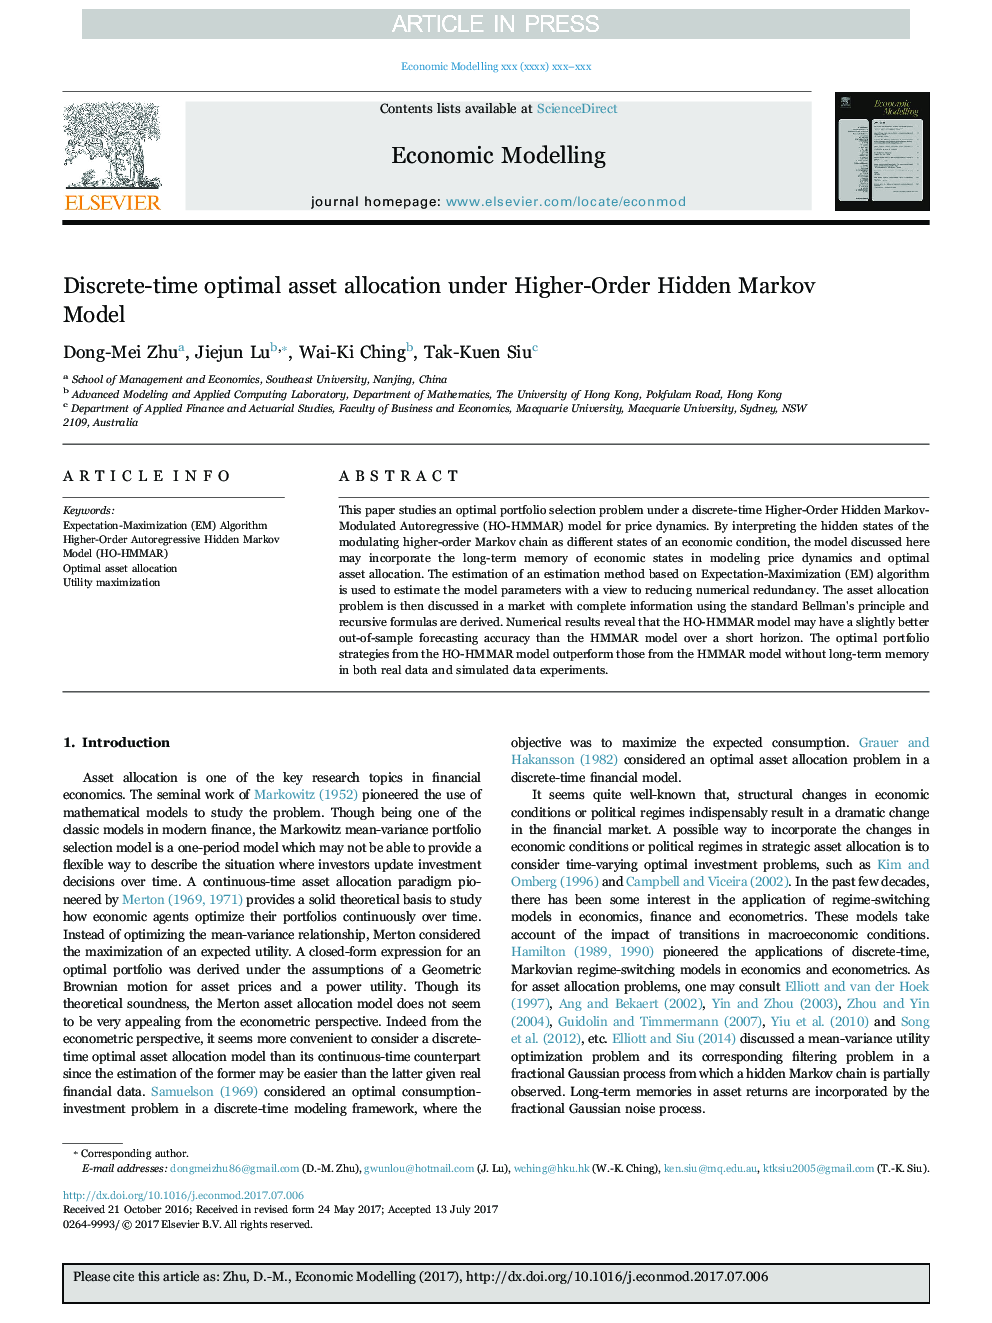 Discrete-time optimal asset allocation under Higher-Order Hidden Markov Model